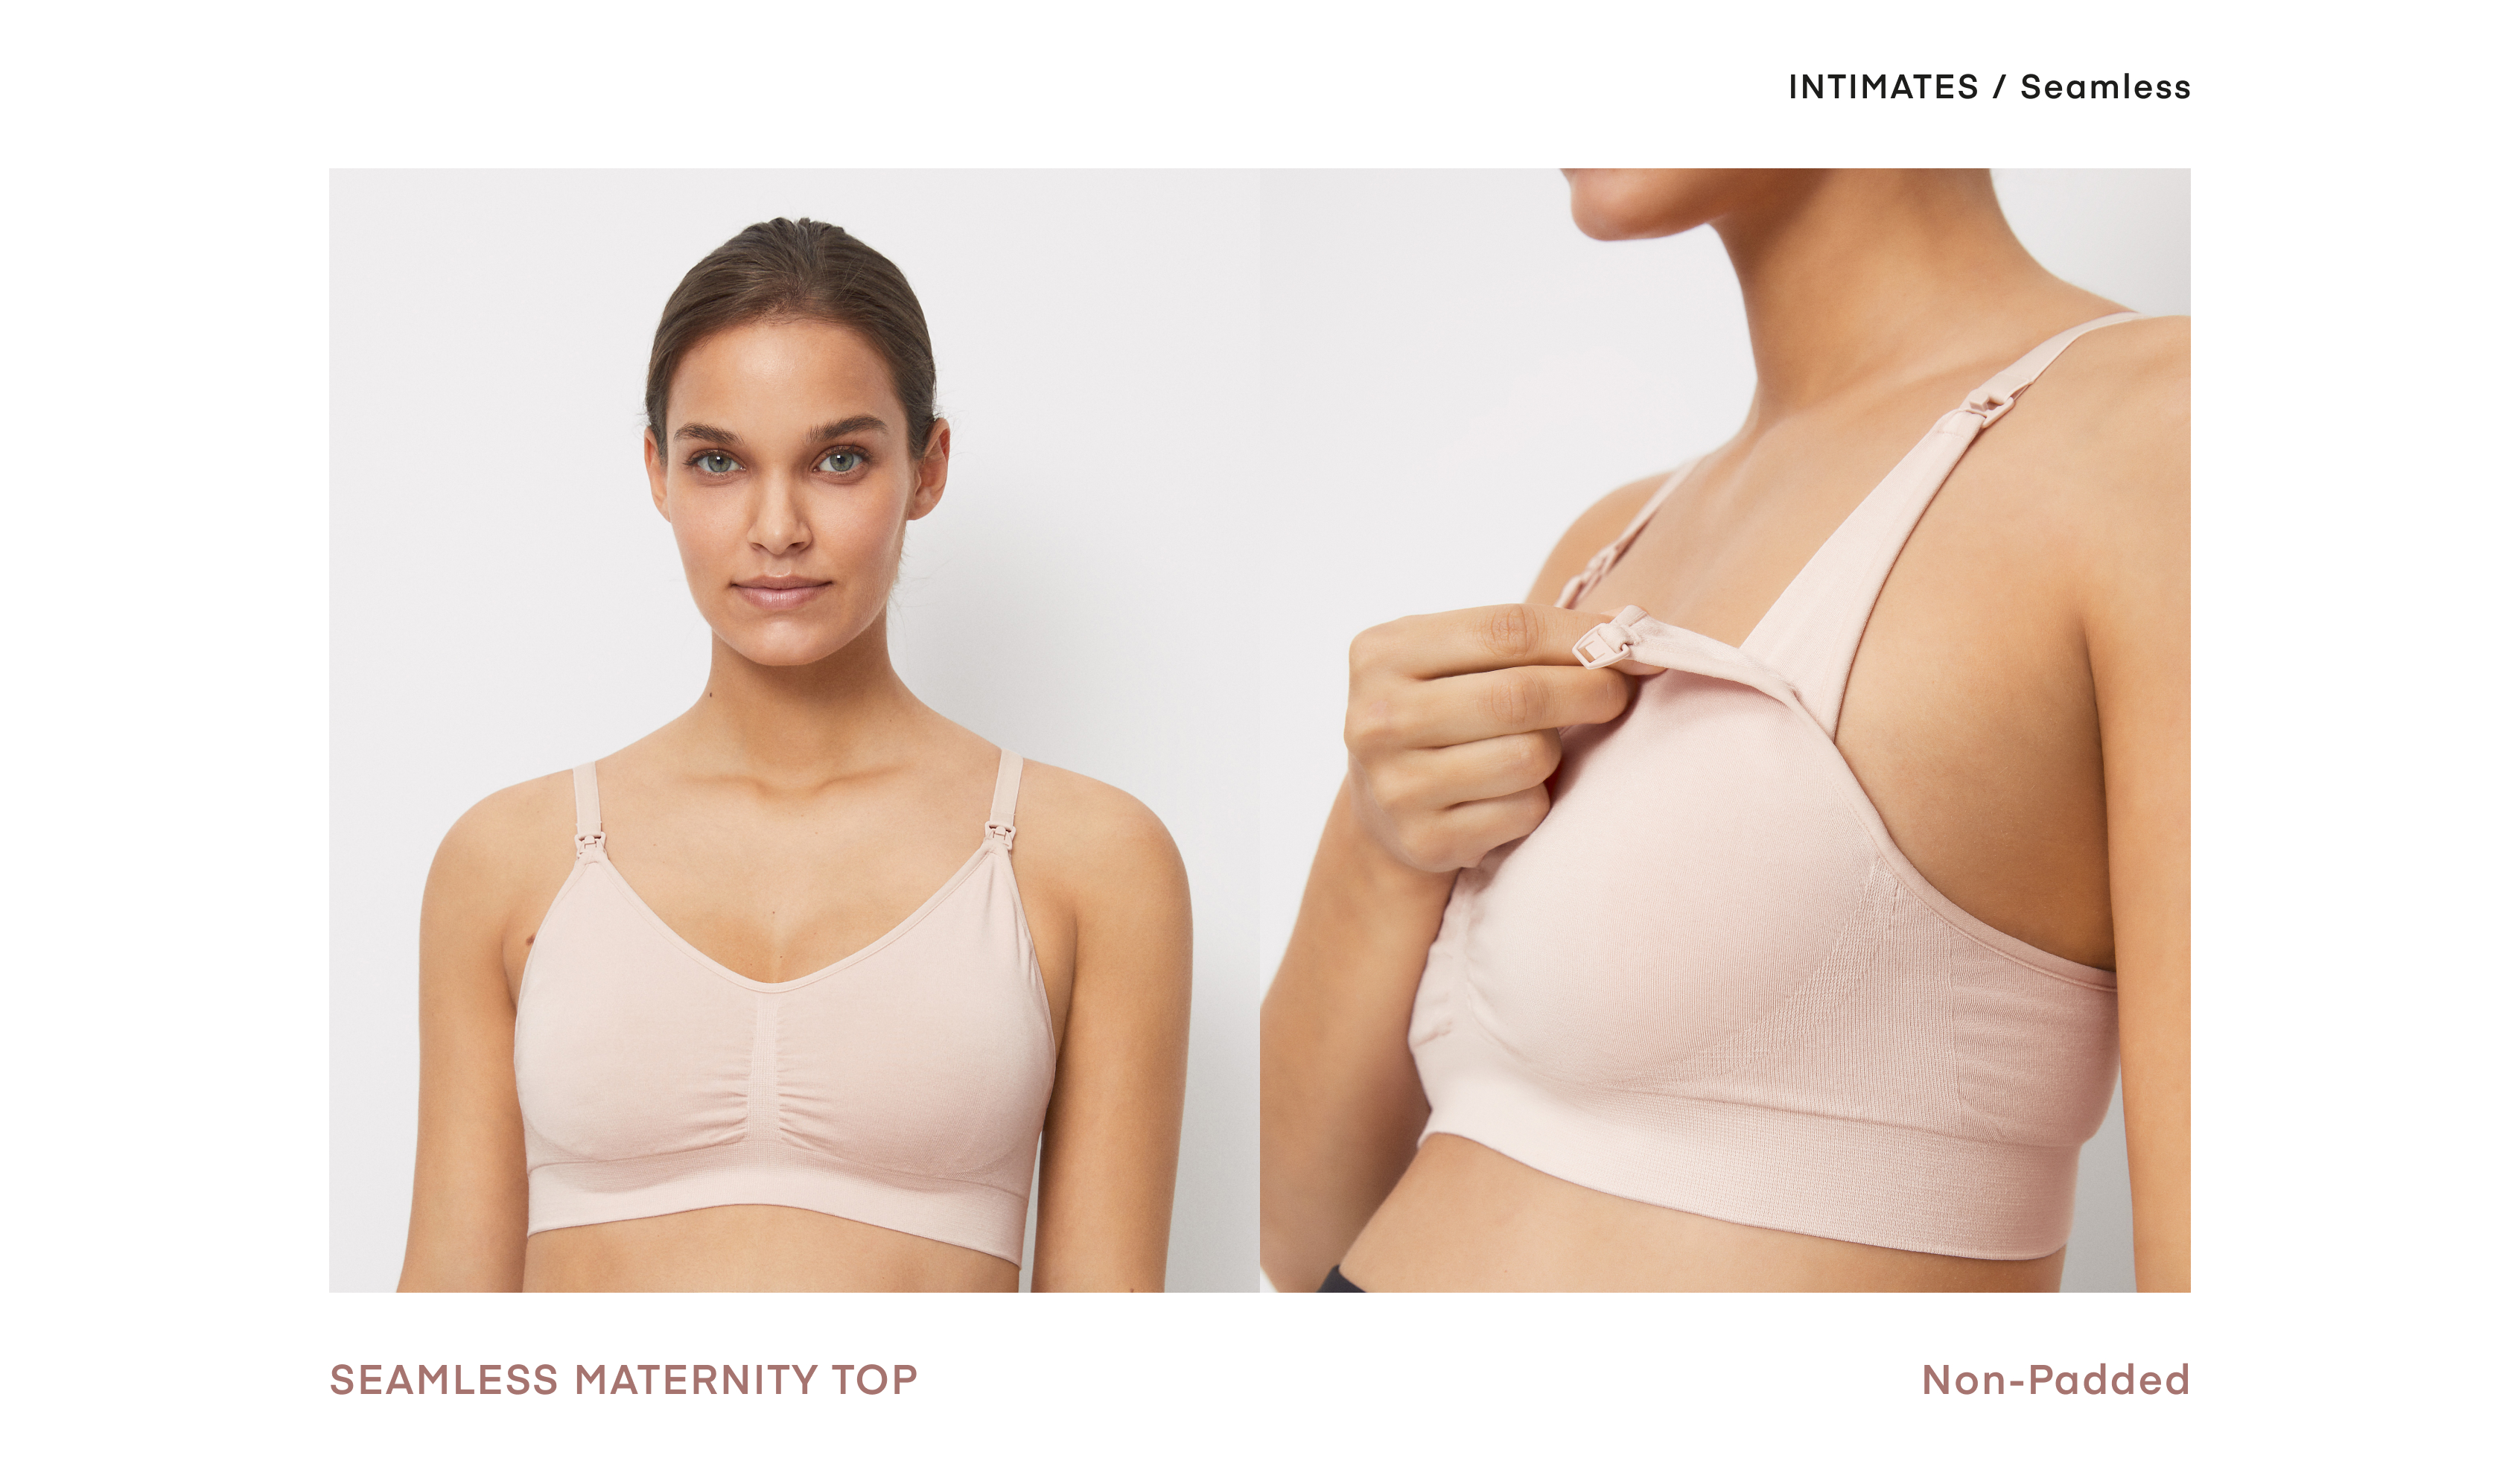 Seamless maternity top